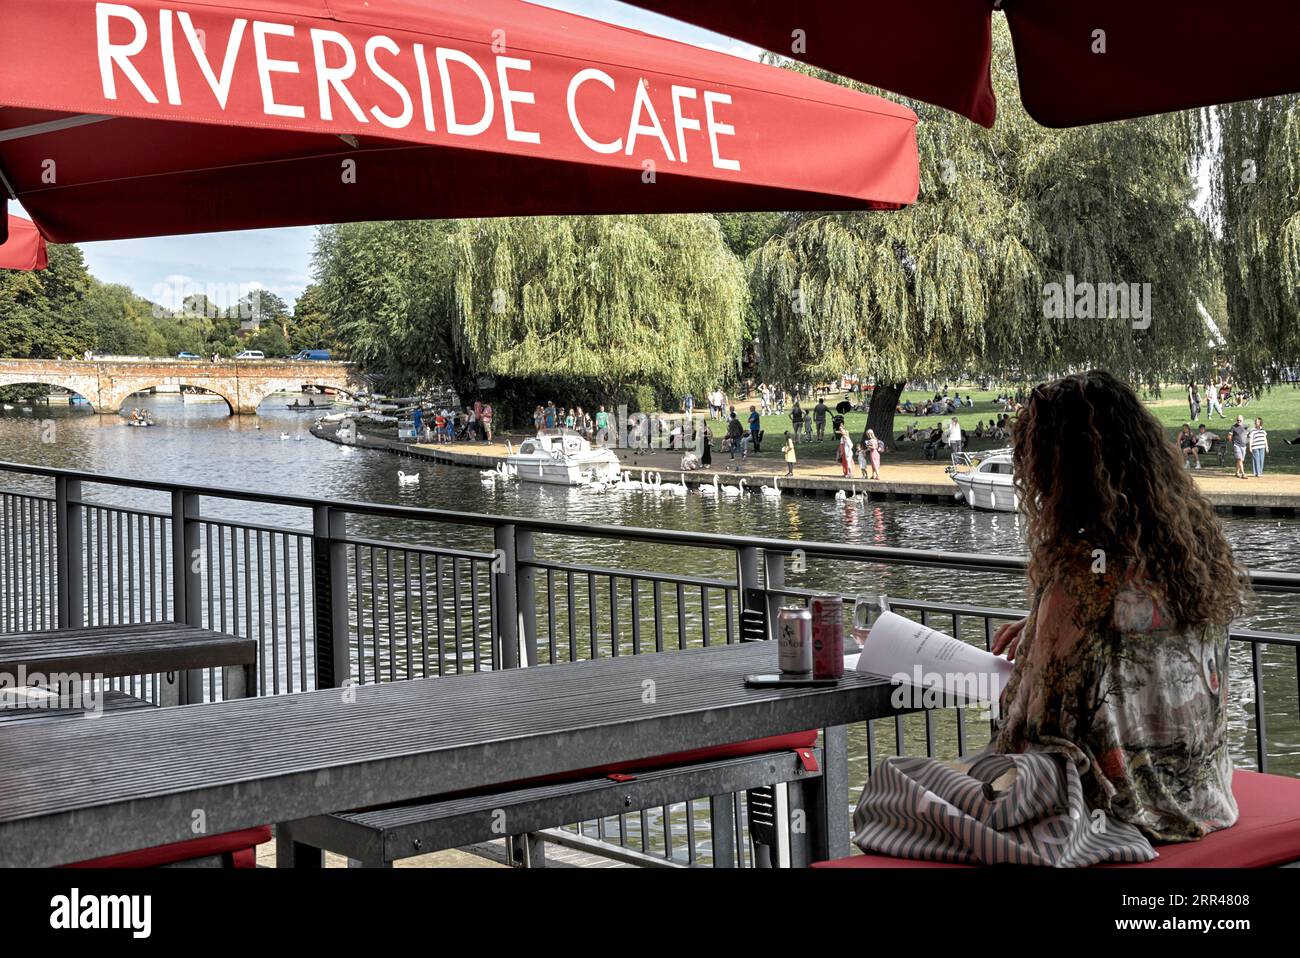 Riverside cafe overlooking the River Avon at Stratford upon Avon, England UK Stock Photo